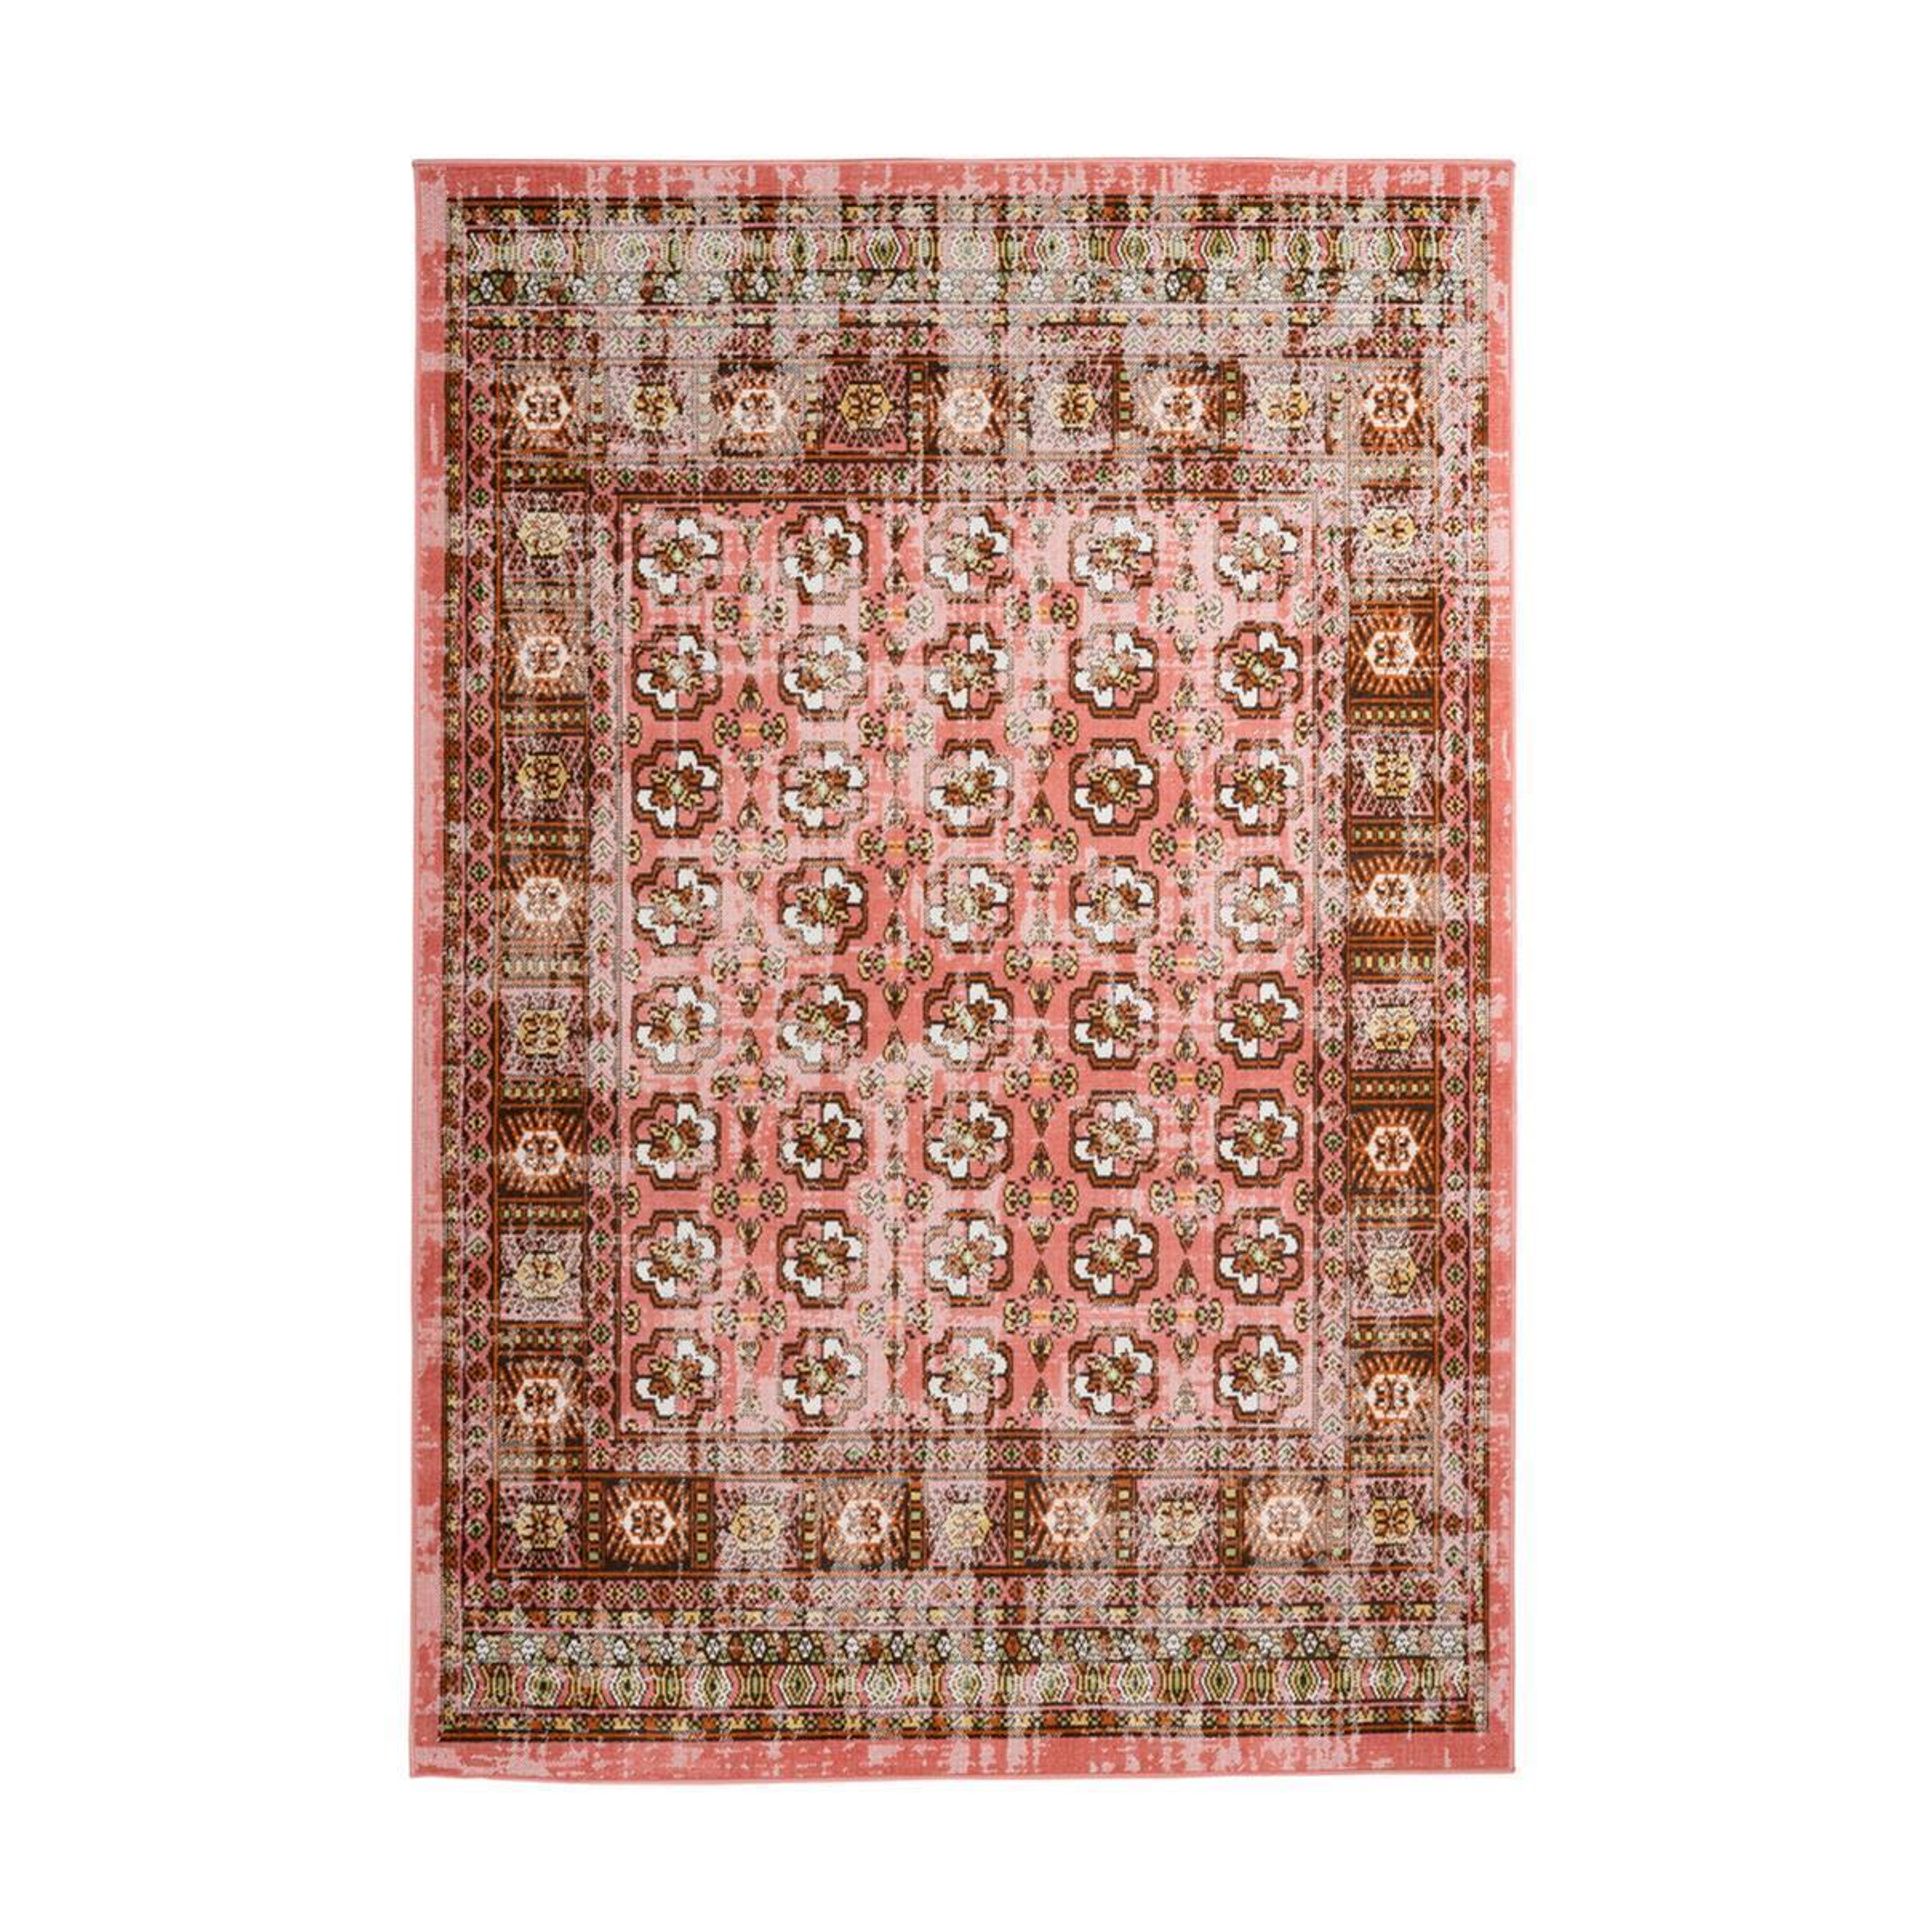 Teppich Ariya 625 Rot 160 cm x 230 cm